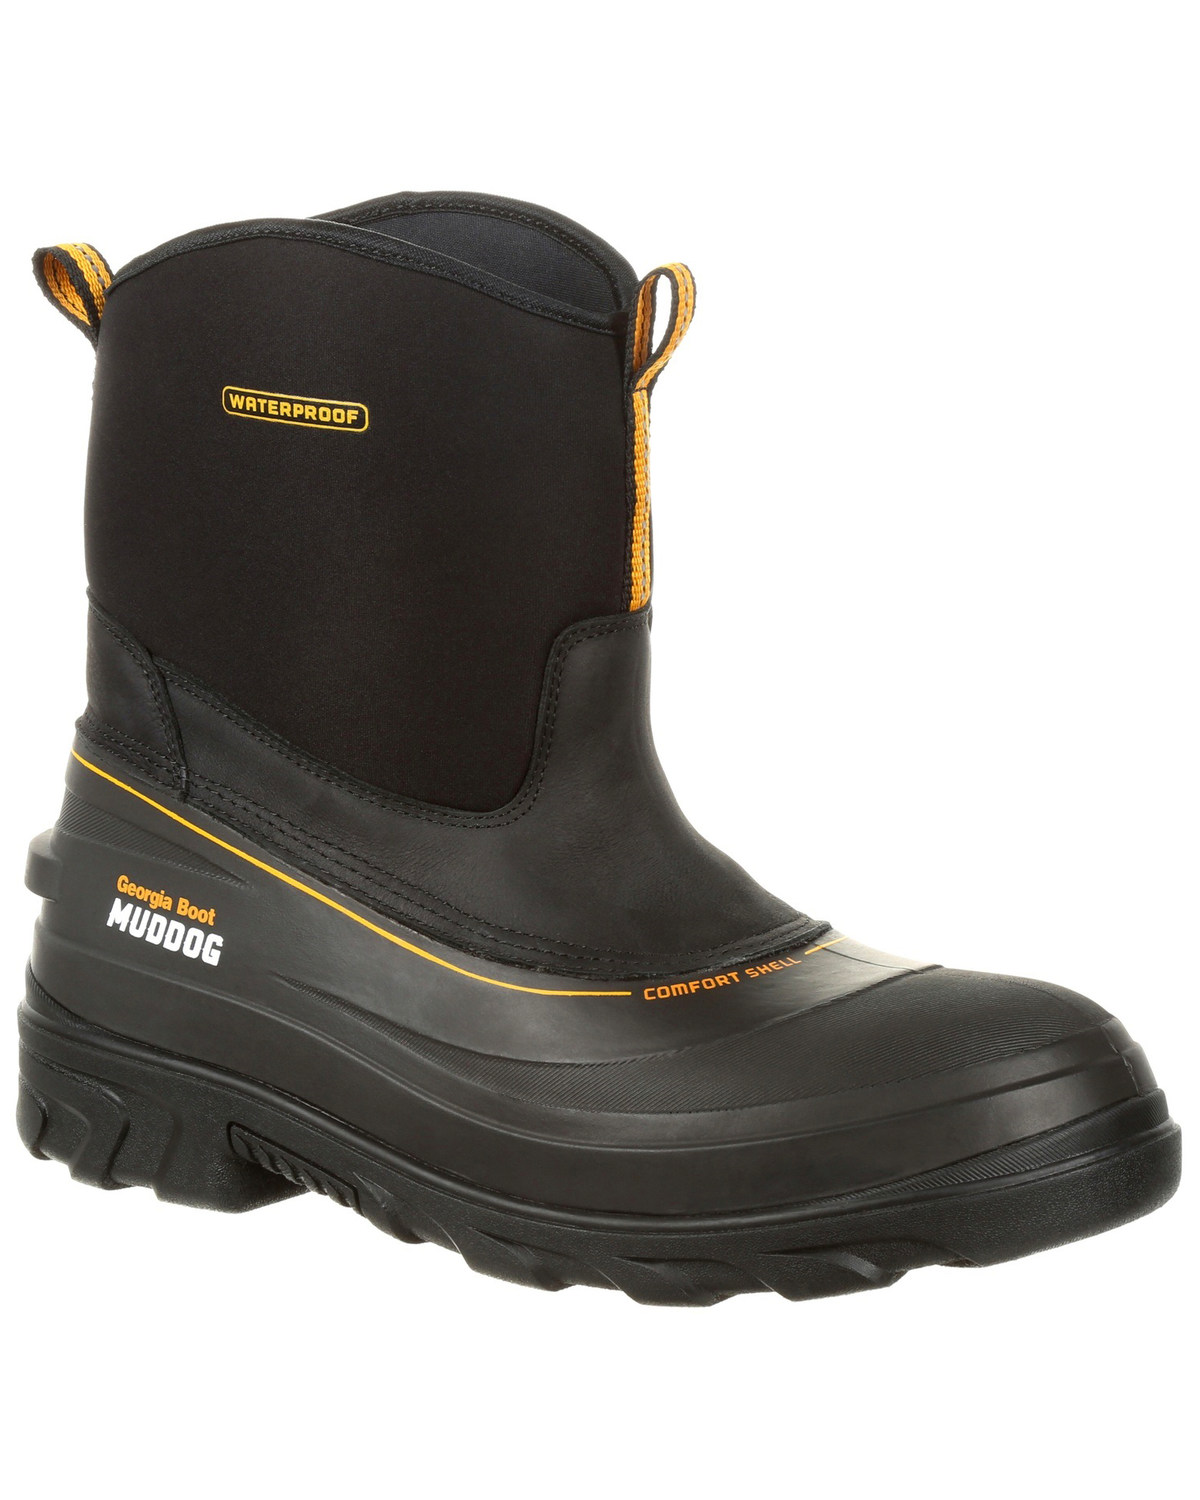 muddog 2 boots